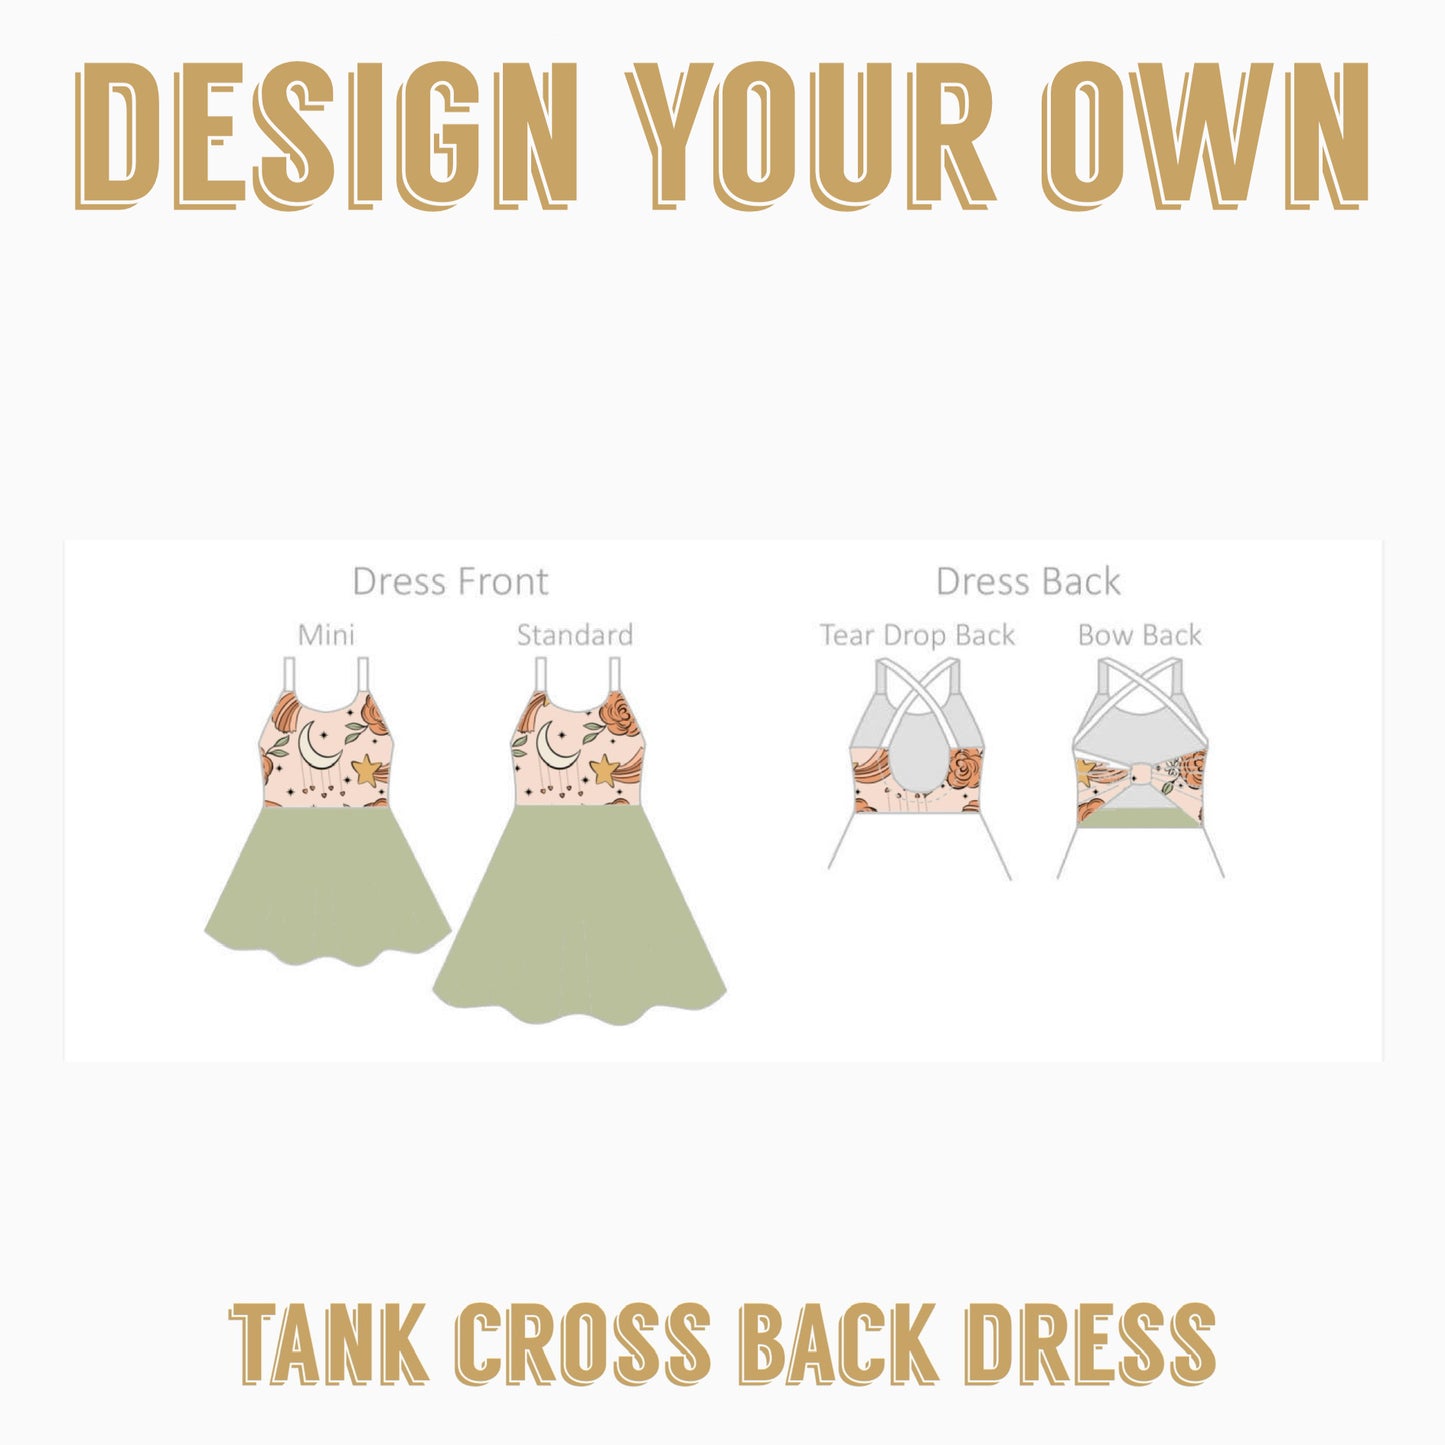 Design your own |Tank Cross Back Dress